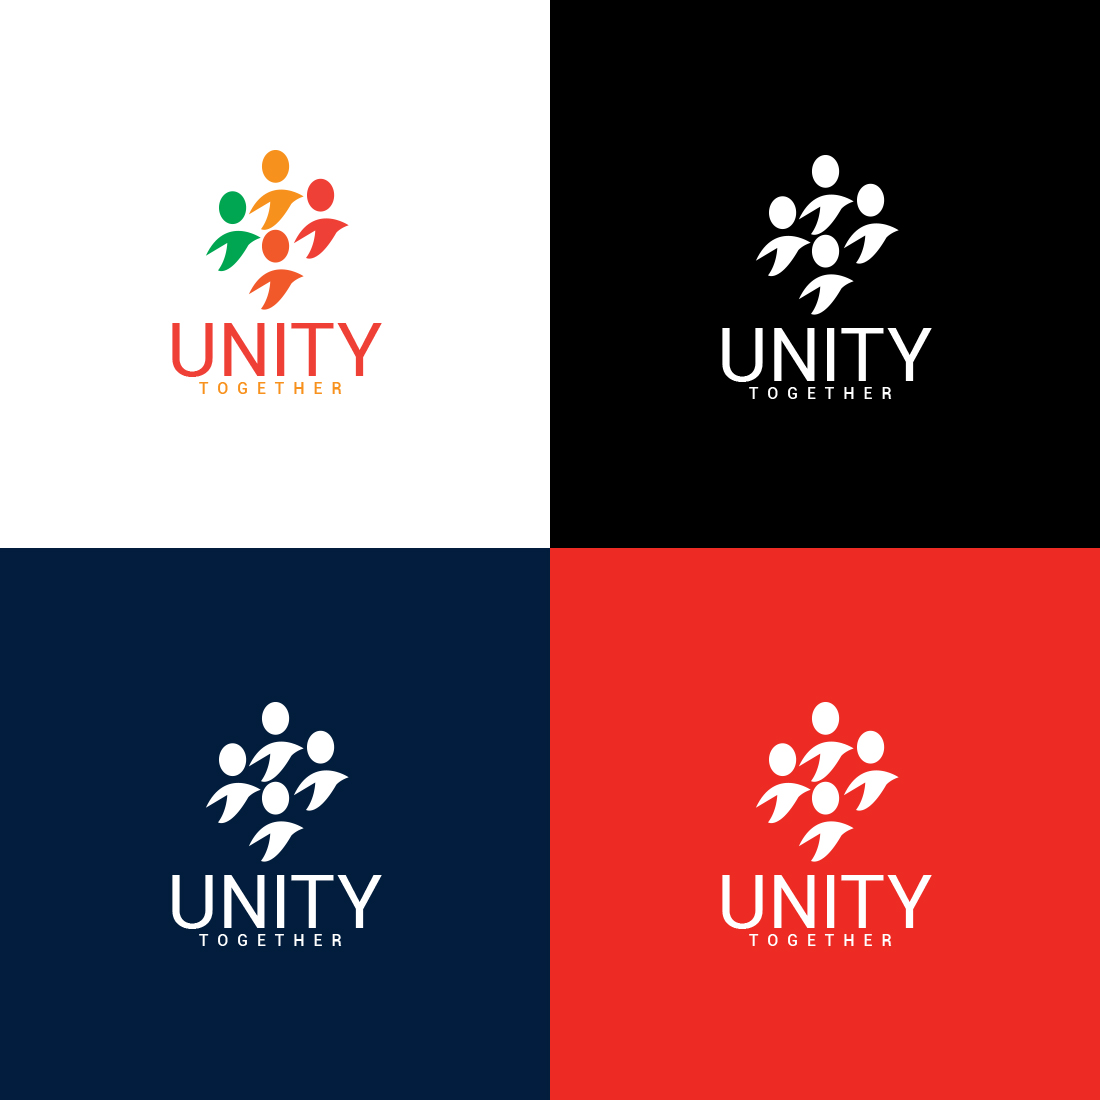 Unity Logo 2 Design Concepts preview image.